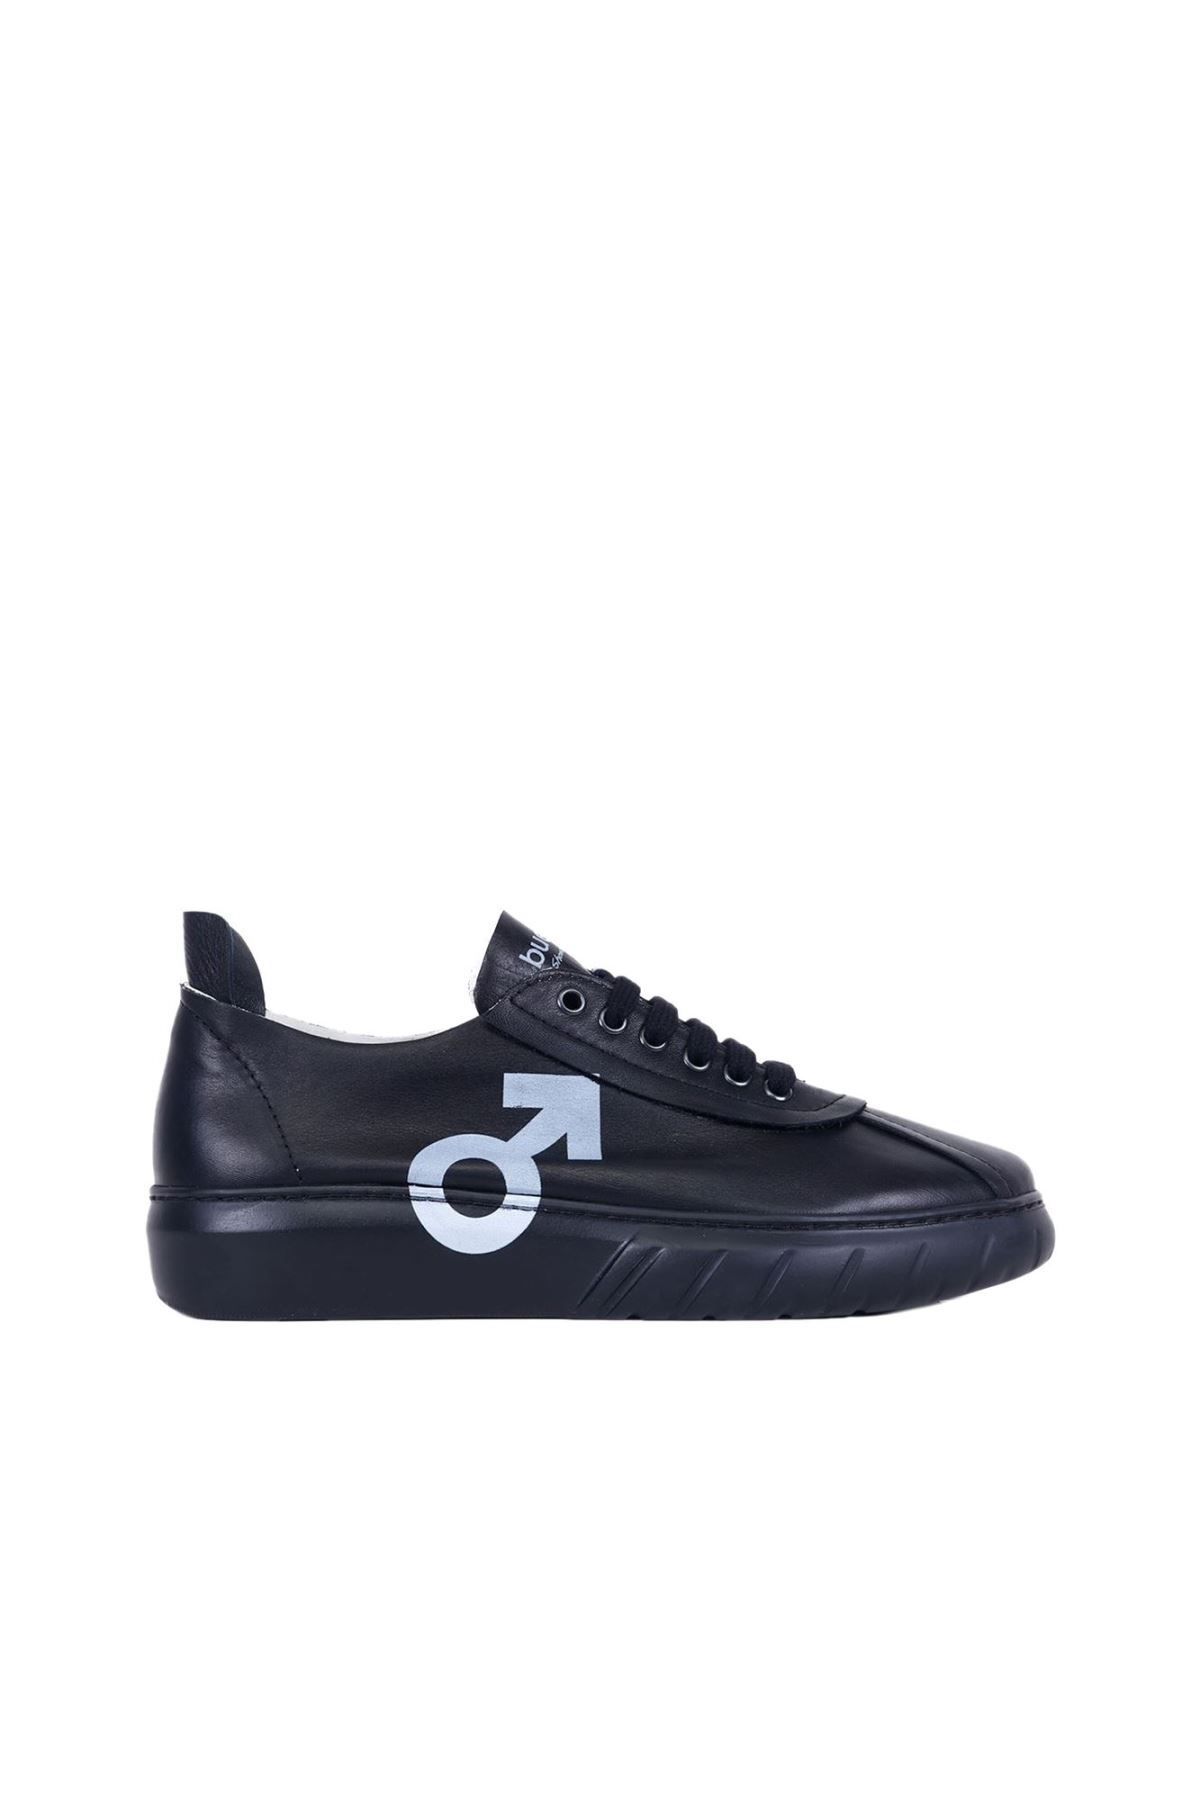 Bueno Shoes Siyah B111c02 Erkek Spor Ayakkabı